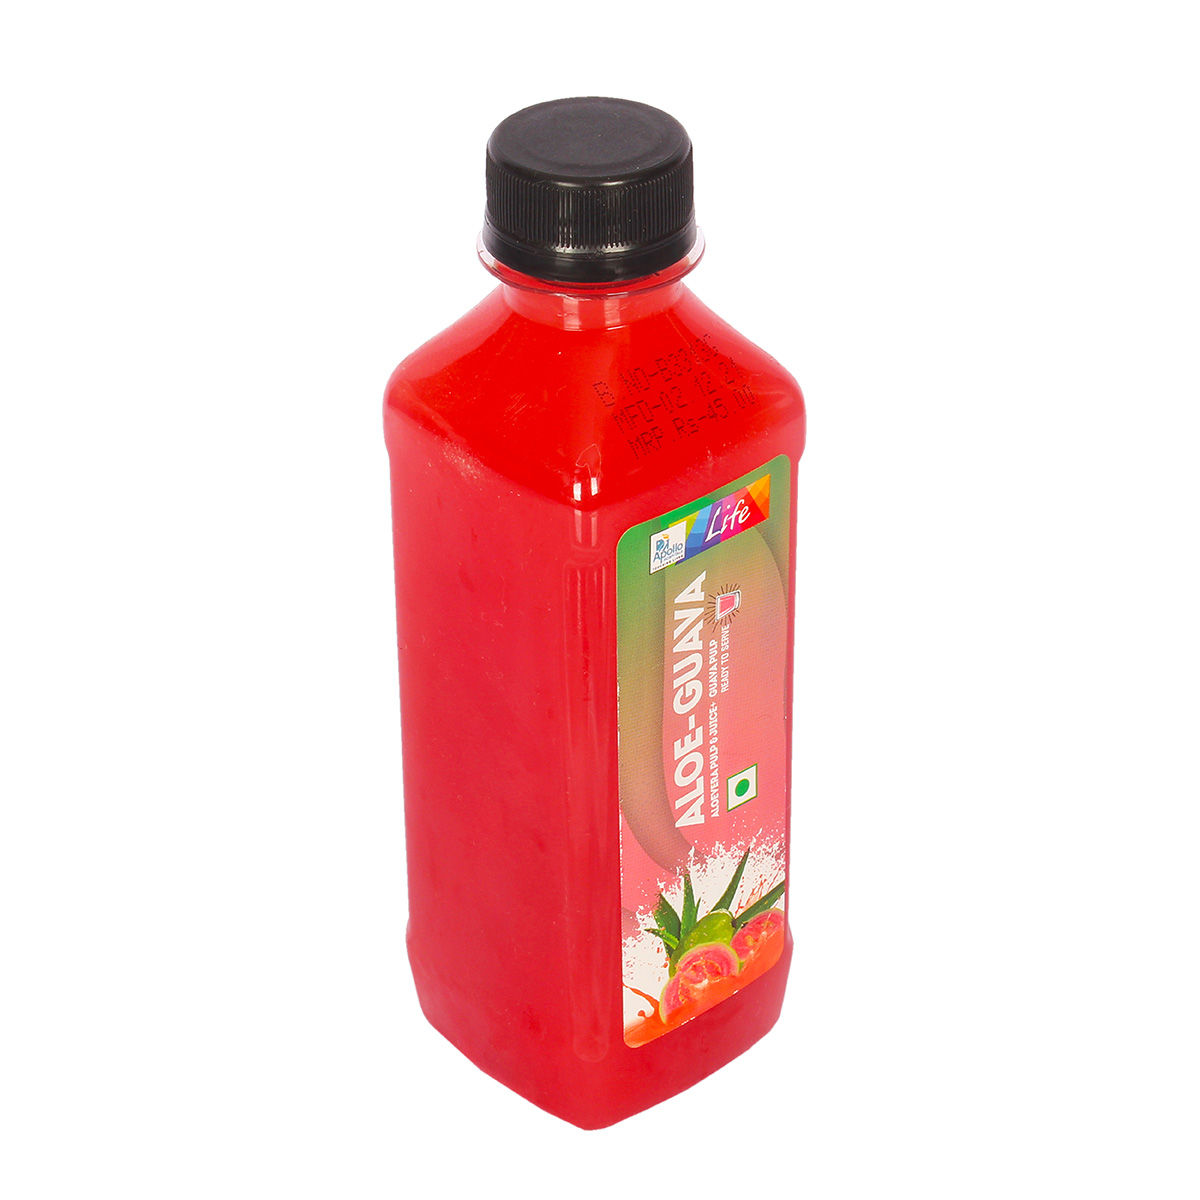 Apollo Life Aloe-Guava Juice, 300 ml, Pack of 1 